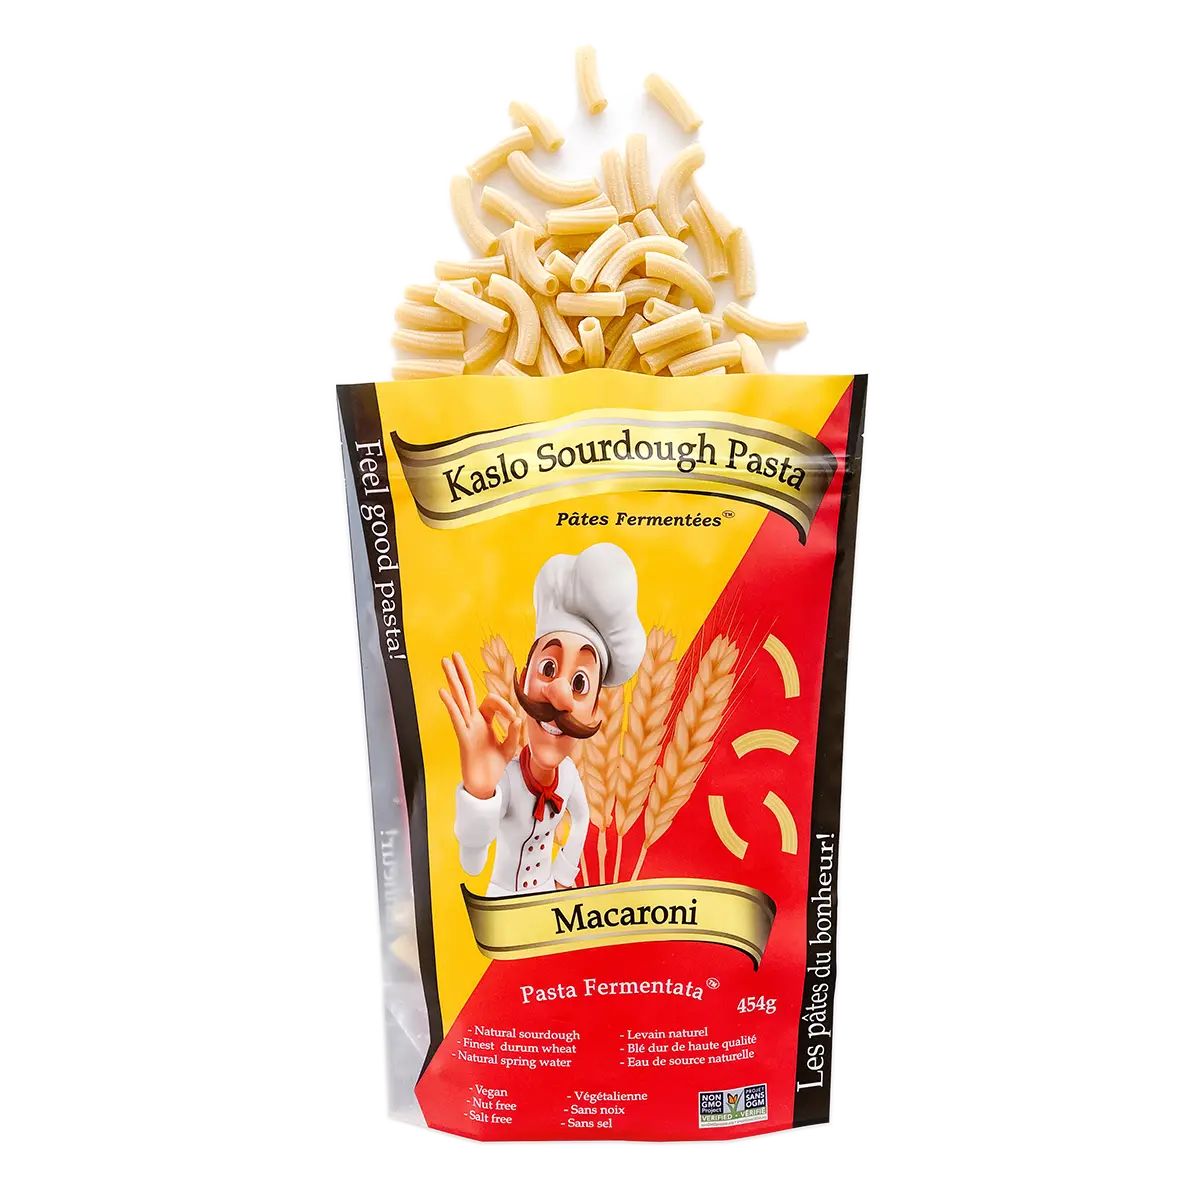 Kaslo Sourdough Pasta - Macaroni 454g